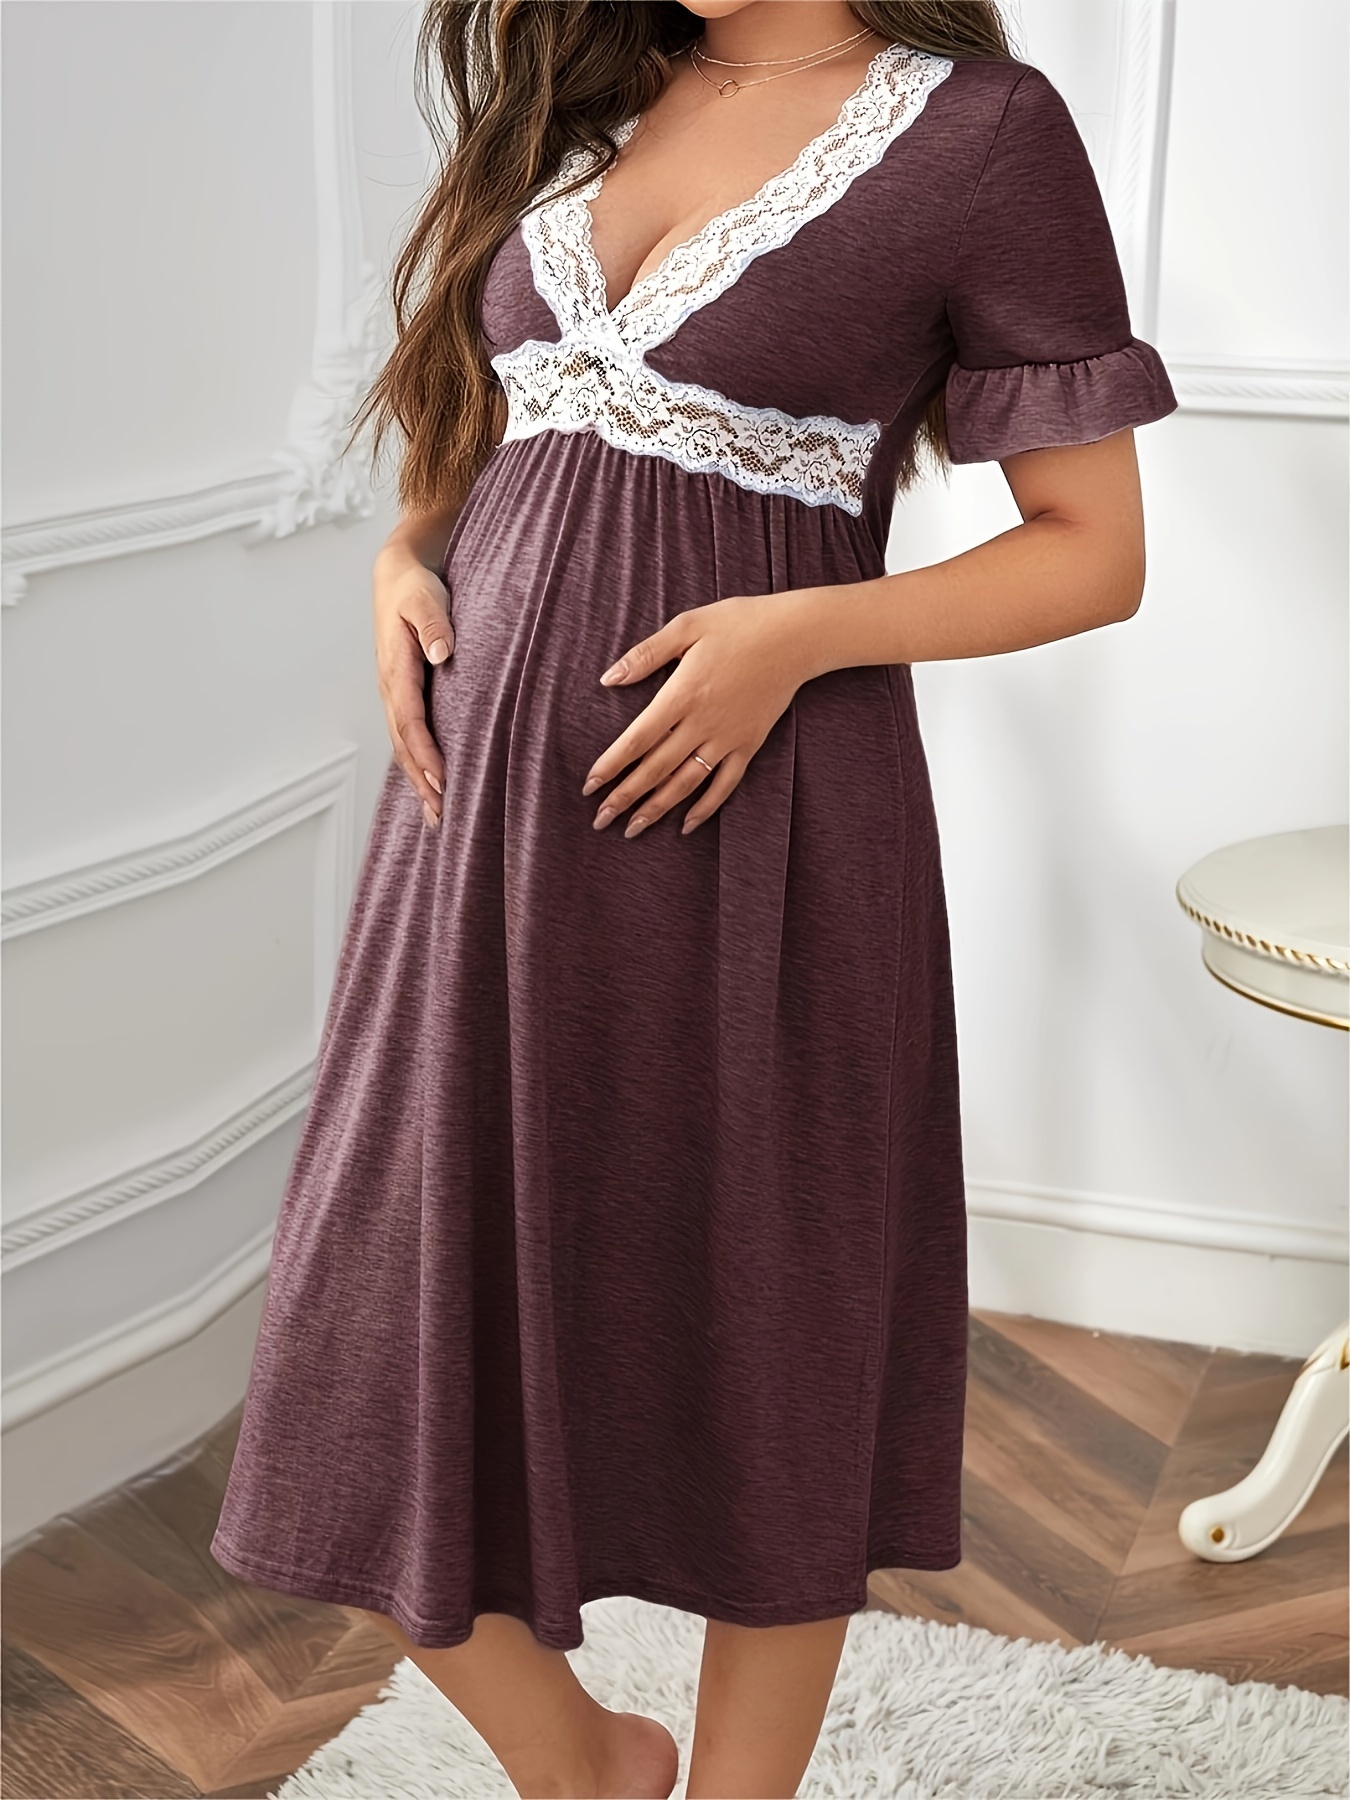 Veseacky Women Maternity Nightgown Short Sleeve Sleepshirt Cotton